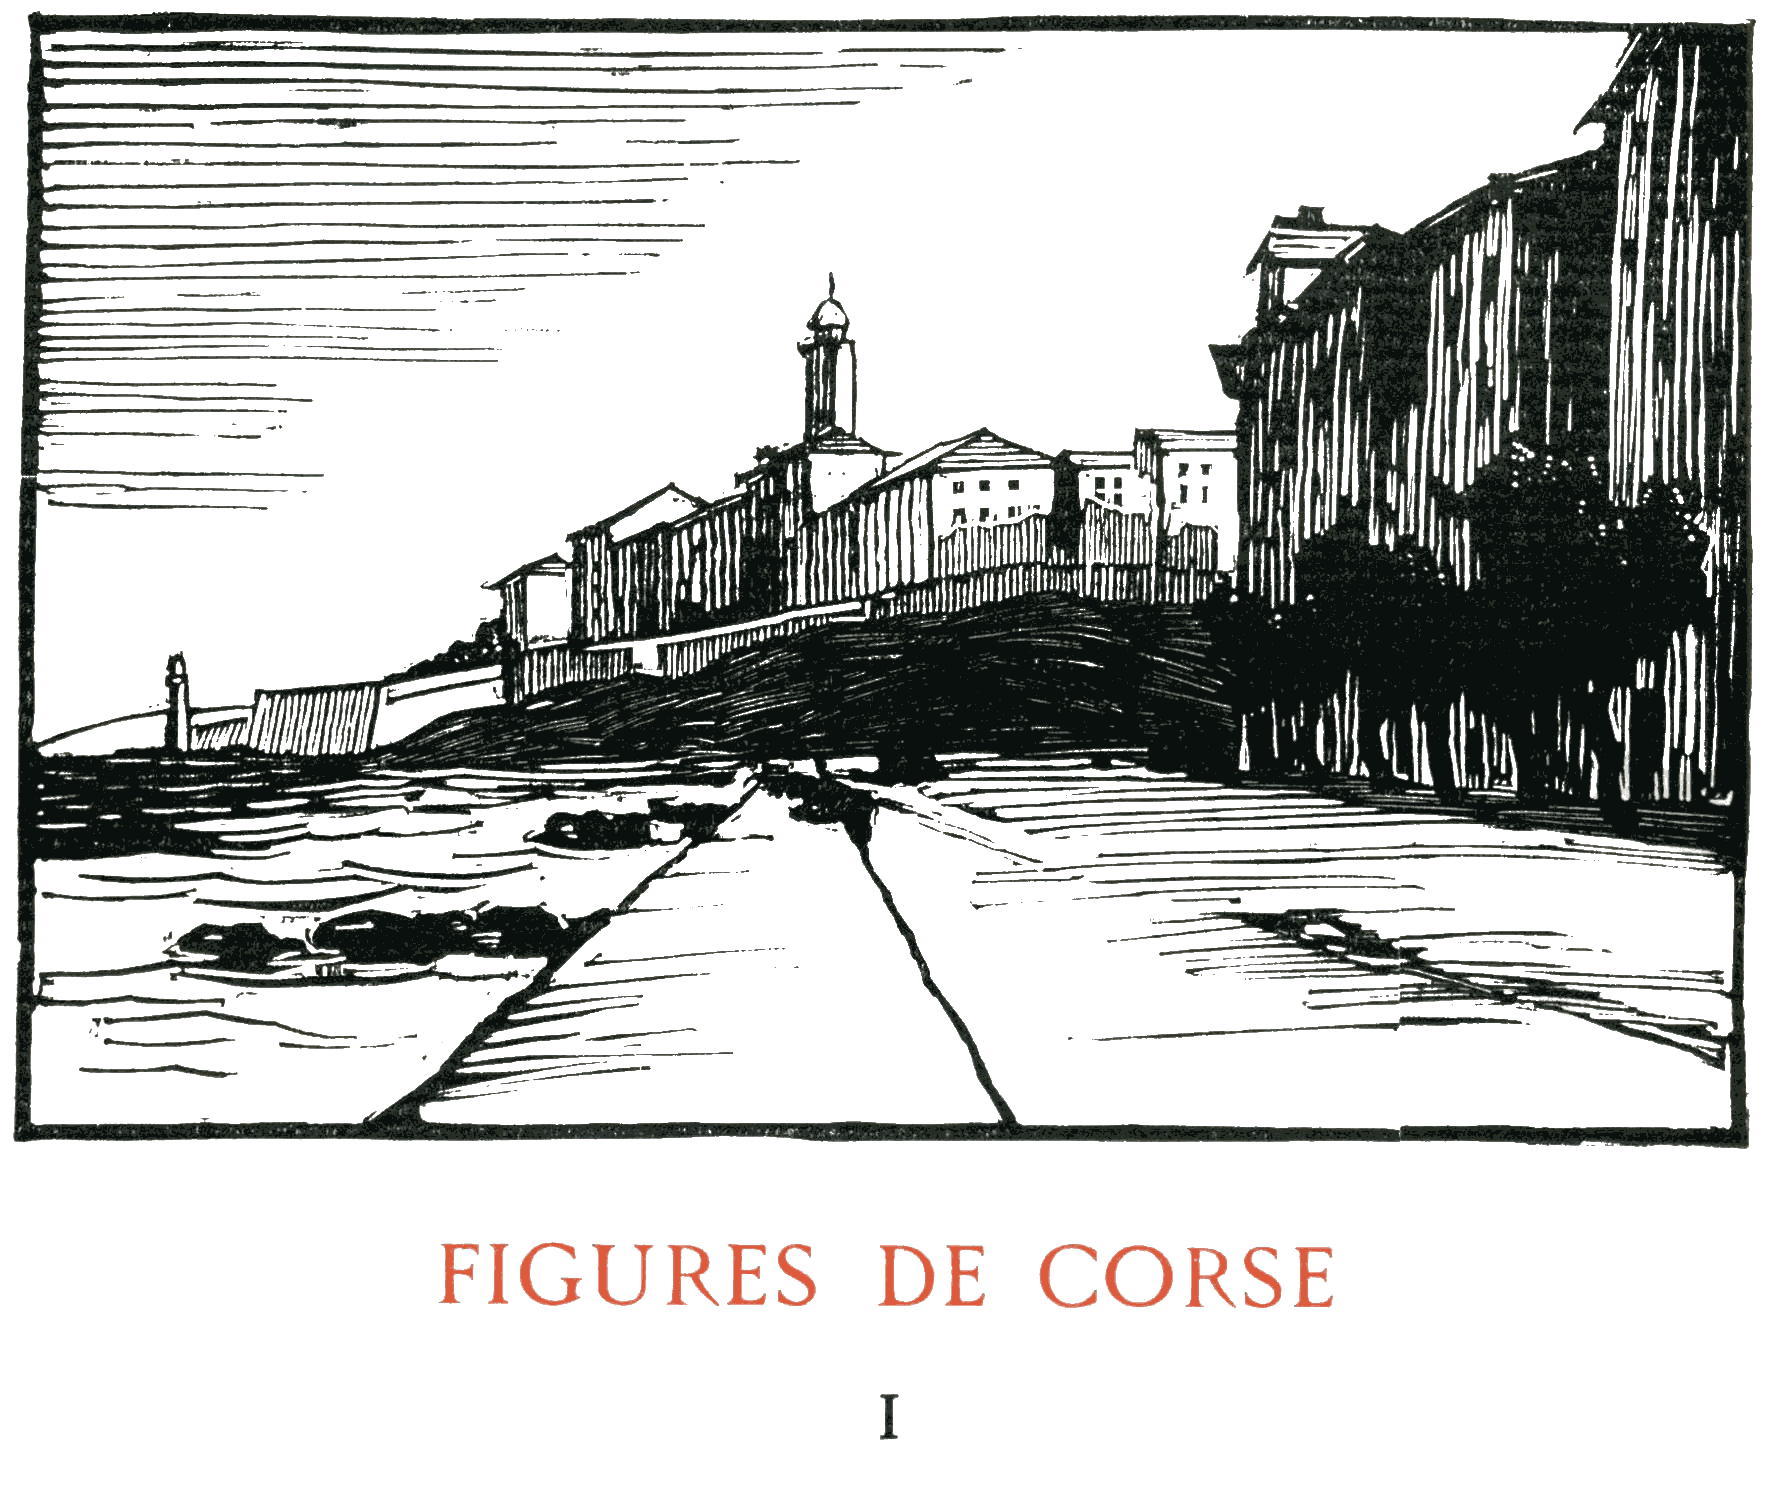 Figures de Corse